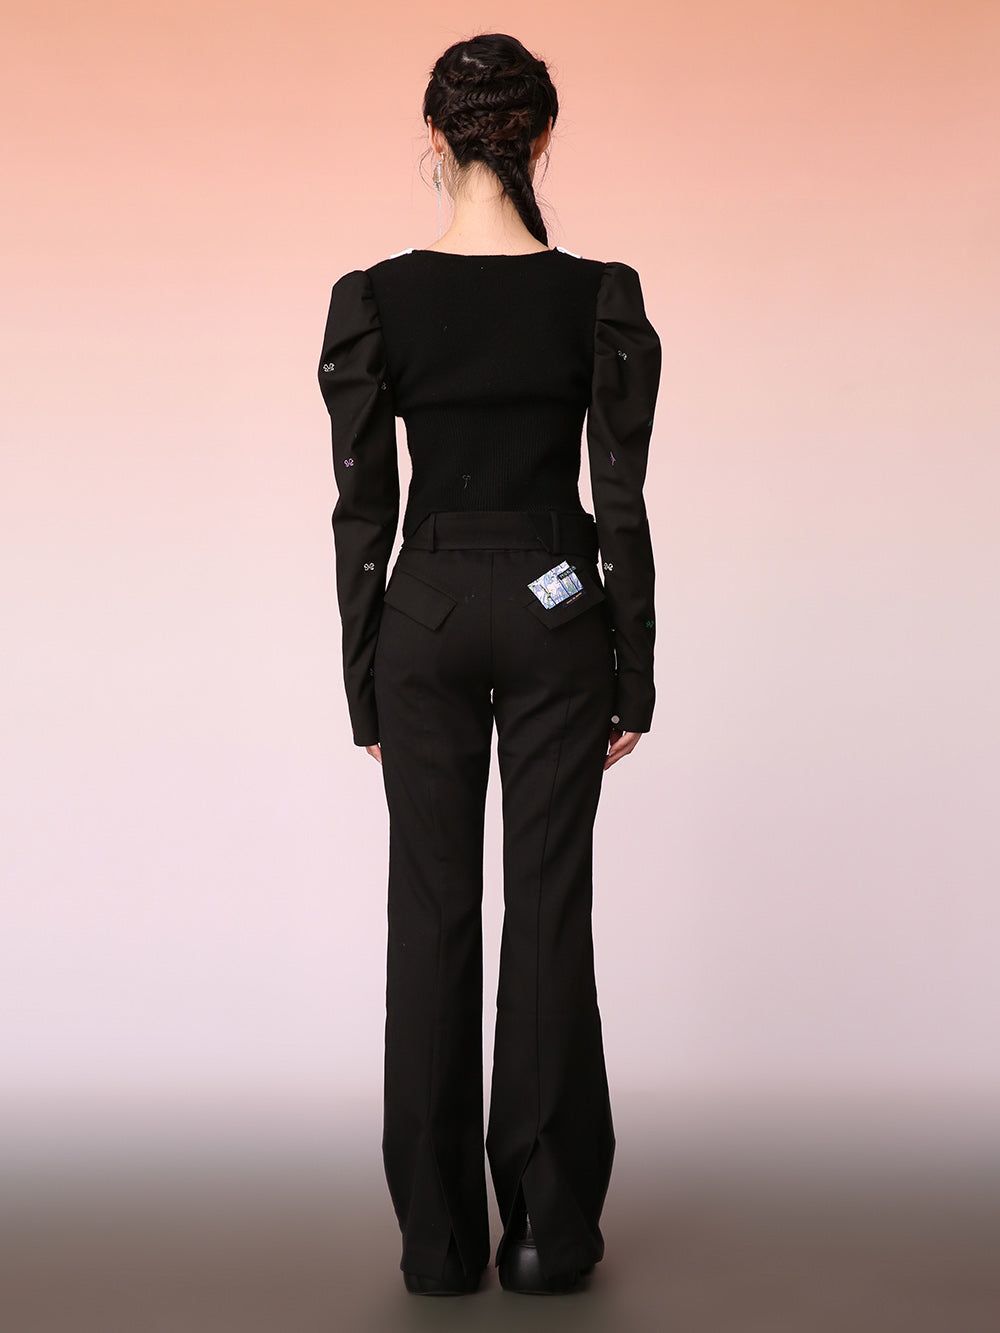 MUKZIN Black Stitching Design Fashion Embroidered Sweater